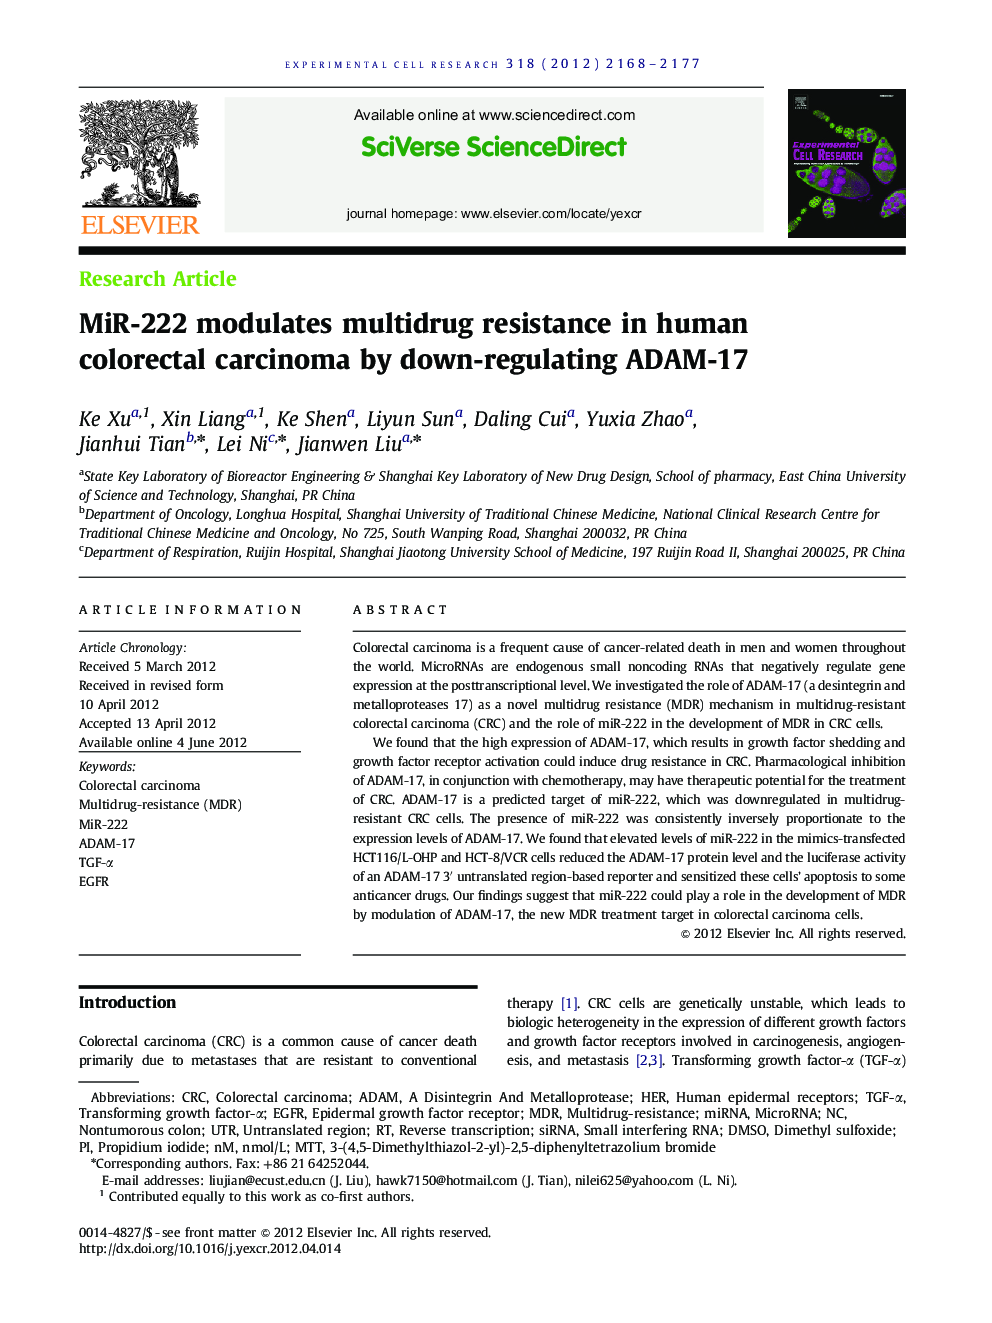 MiR-222 modulates multidrug resistance in human colorectal carcinoma by down-regulating ADAM-17